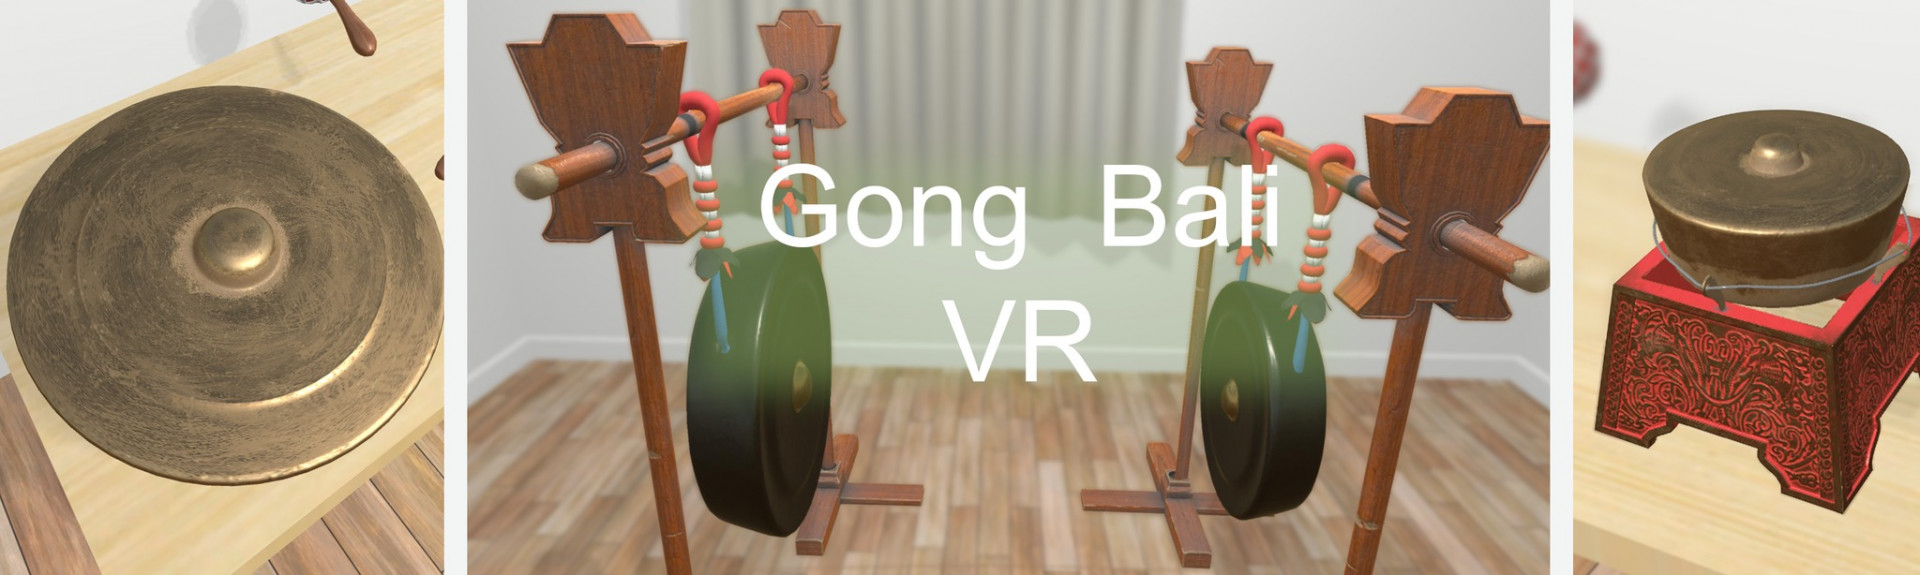 Gong Bali VR